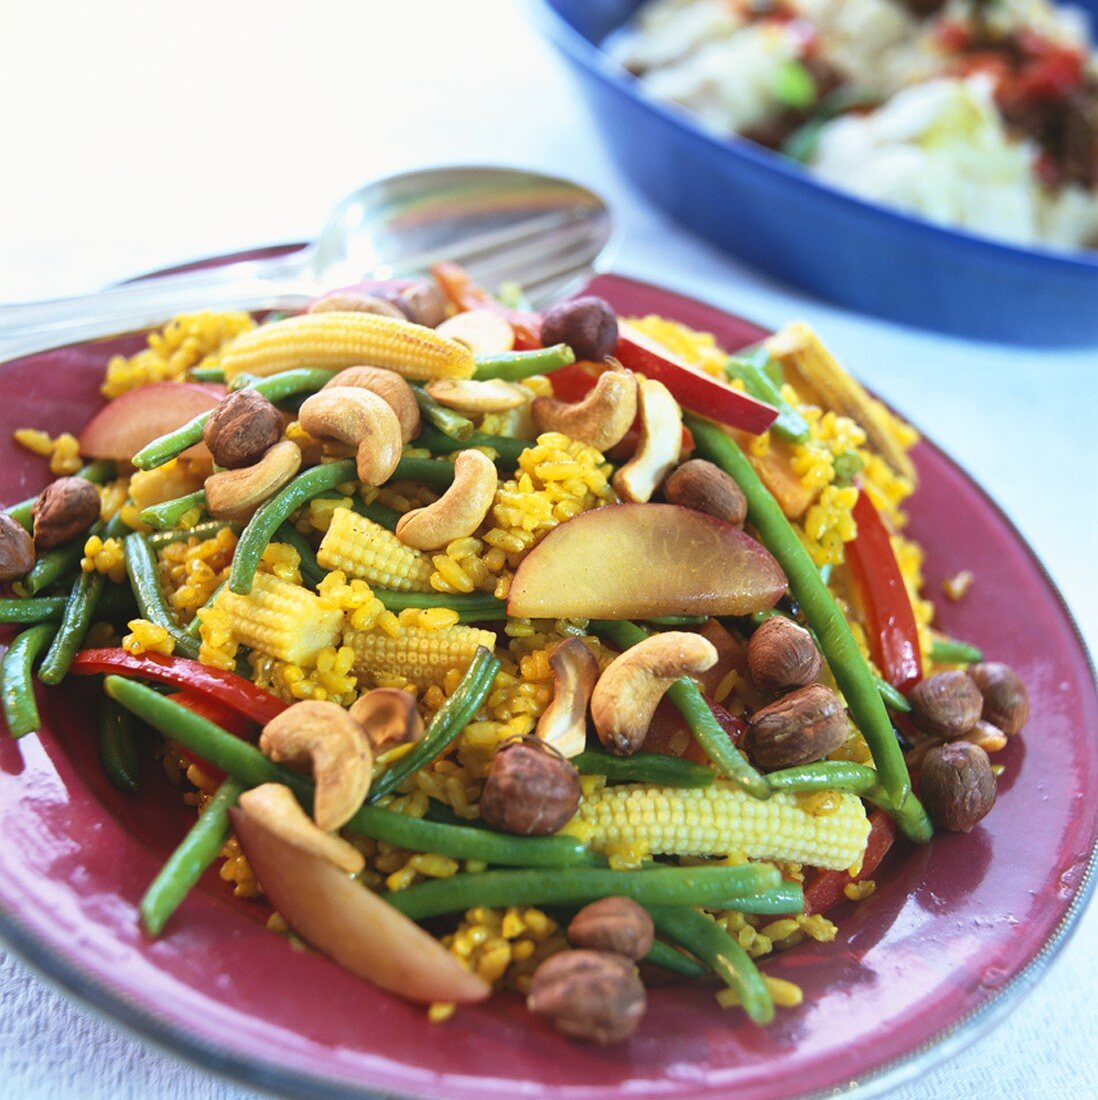 Biryani-style rice dish with vegetables, nectarine, nuts